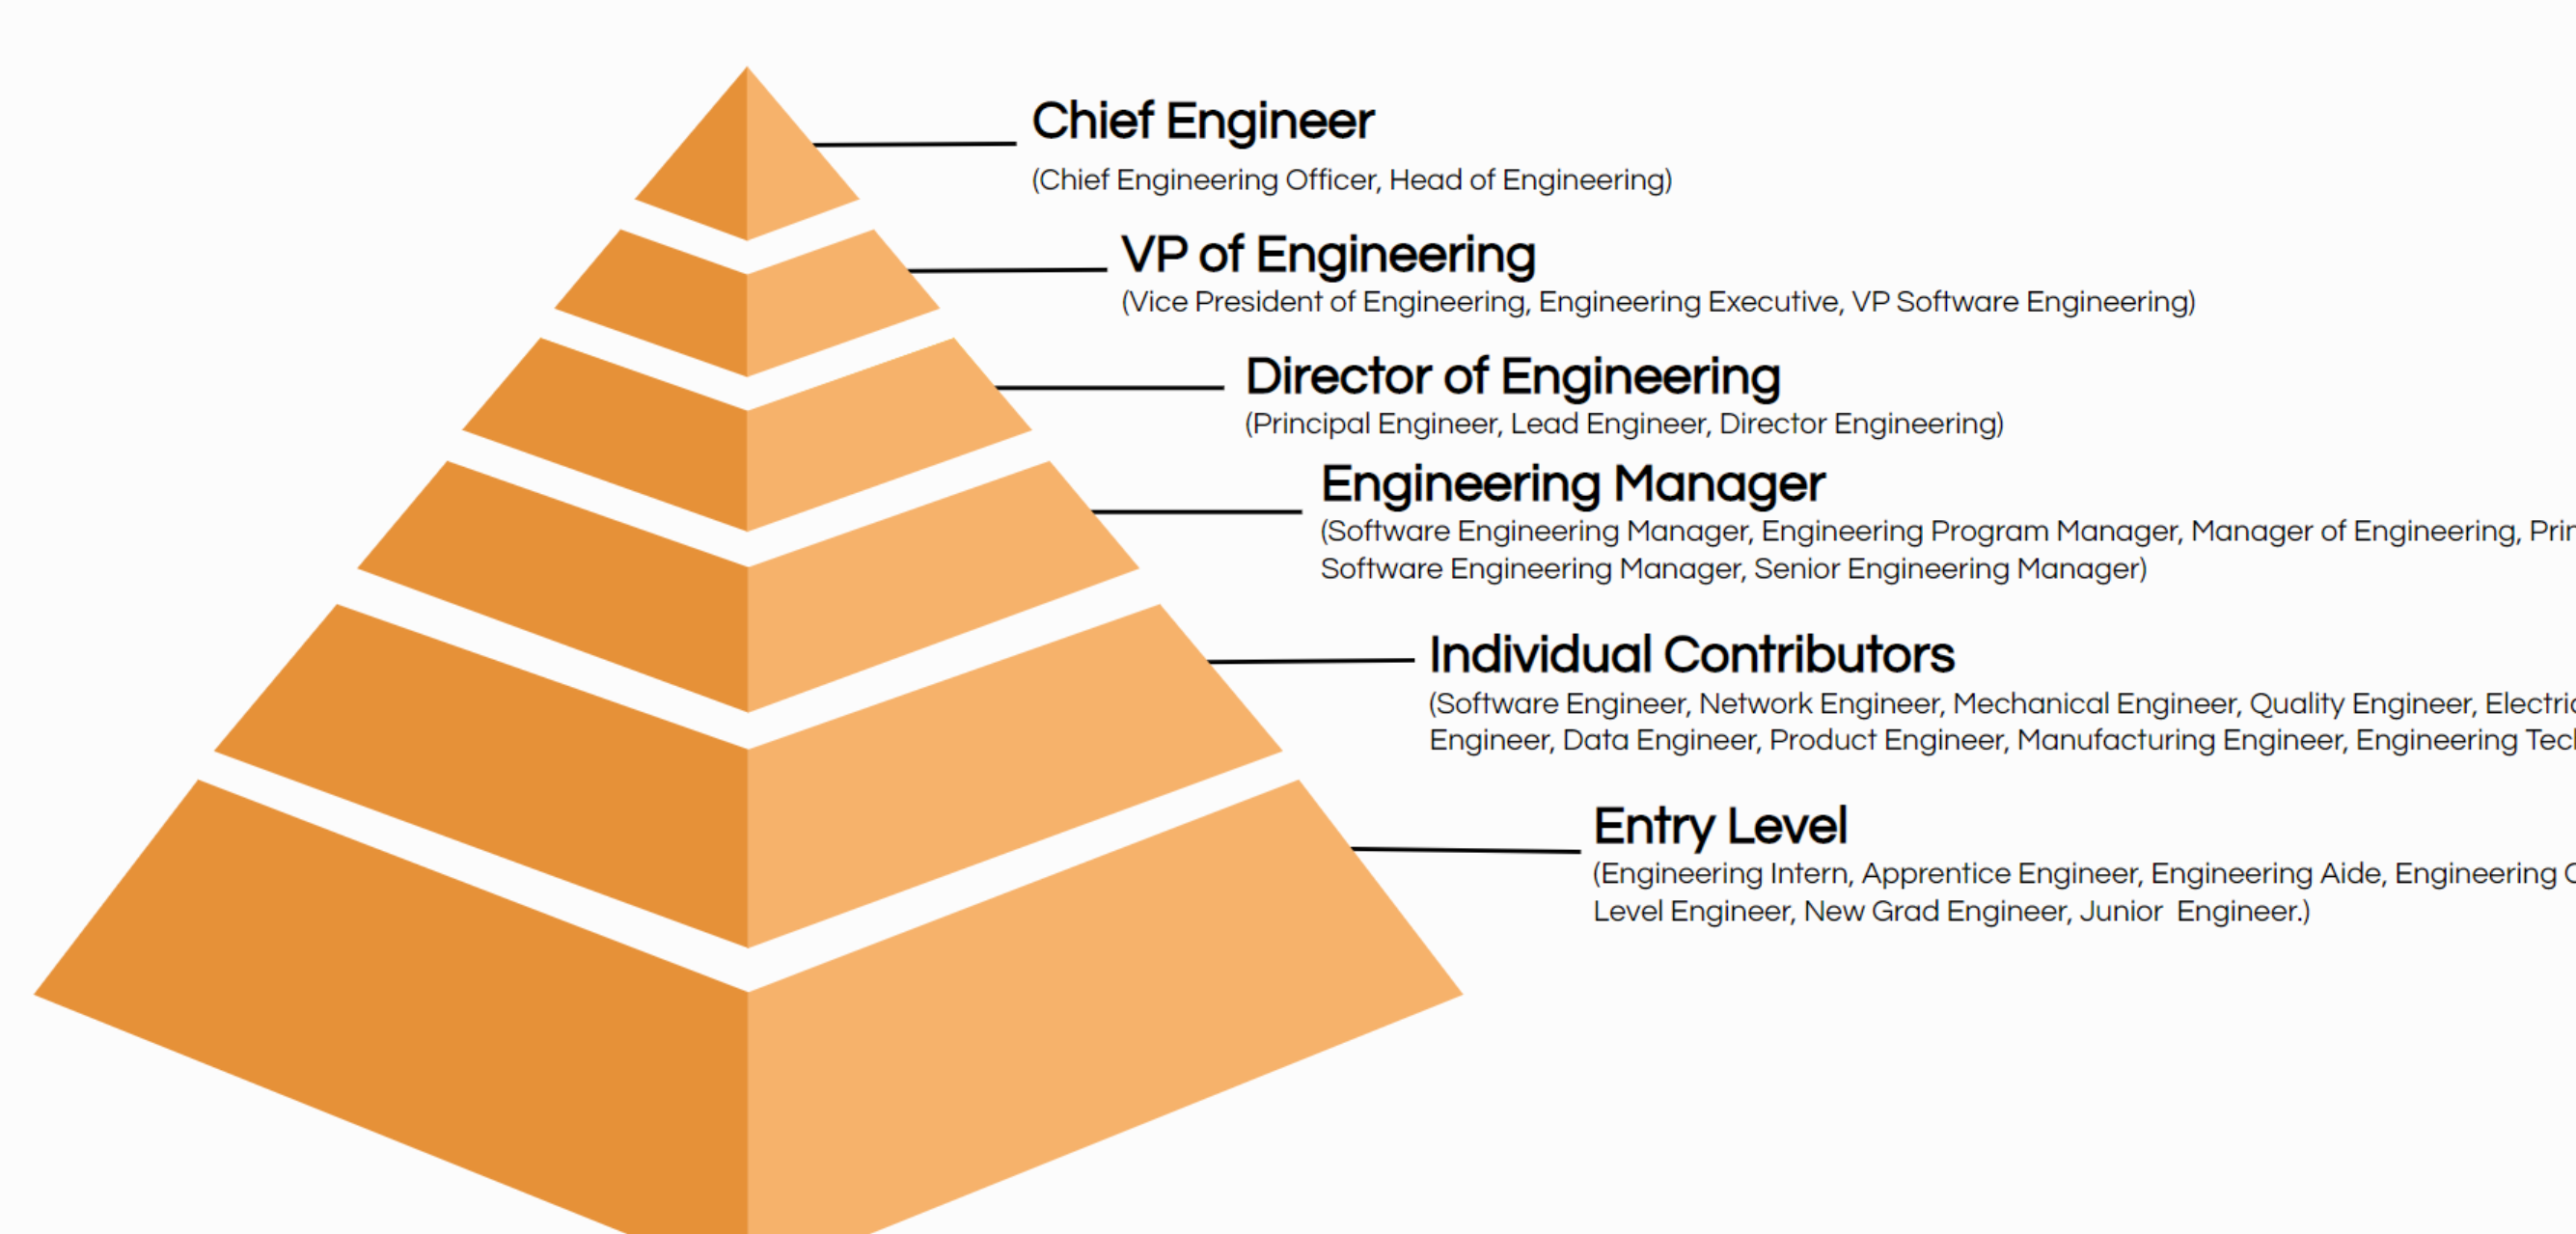 Engineering Jobs - Engineering Careers - Job Options - Job Titles - Job Descriptions